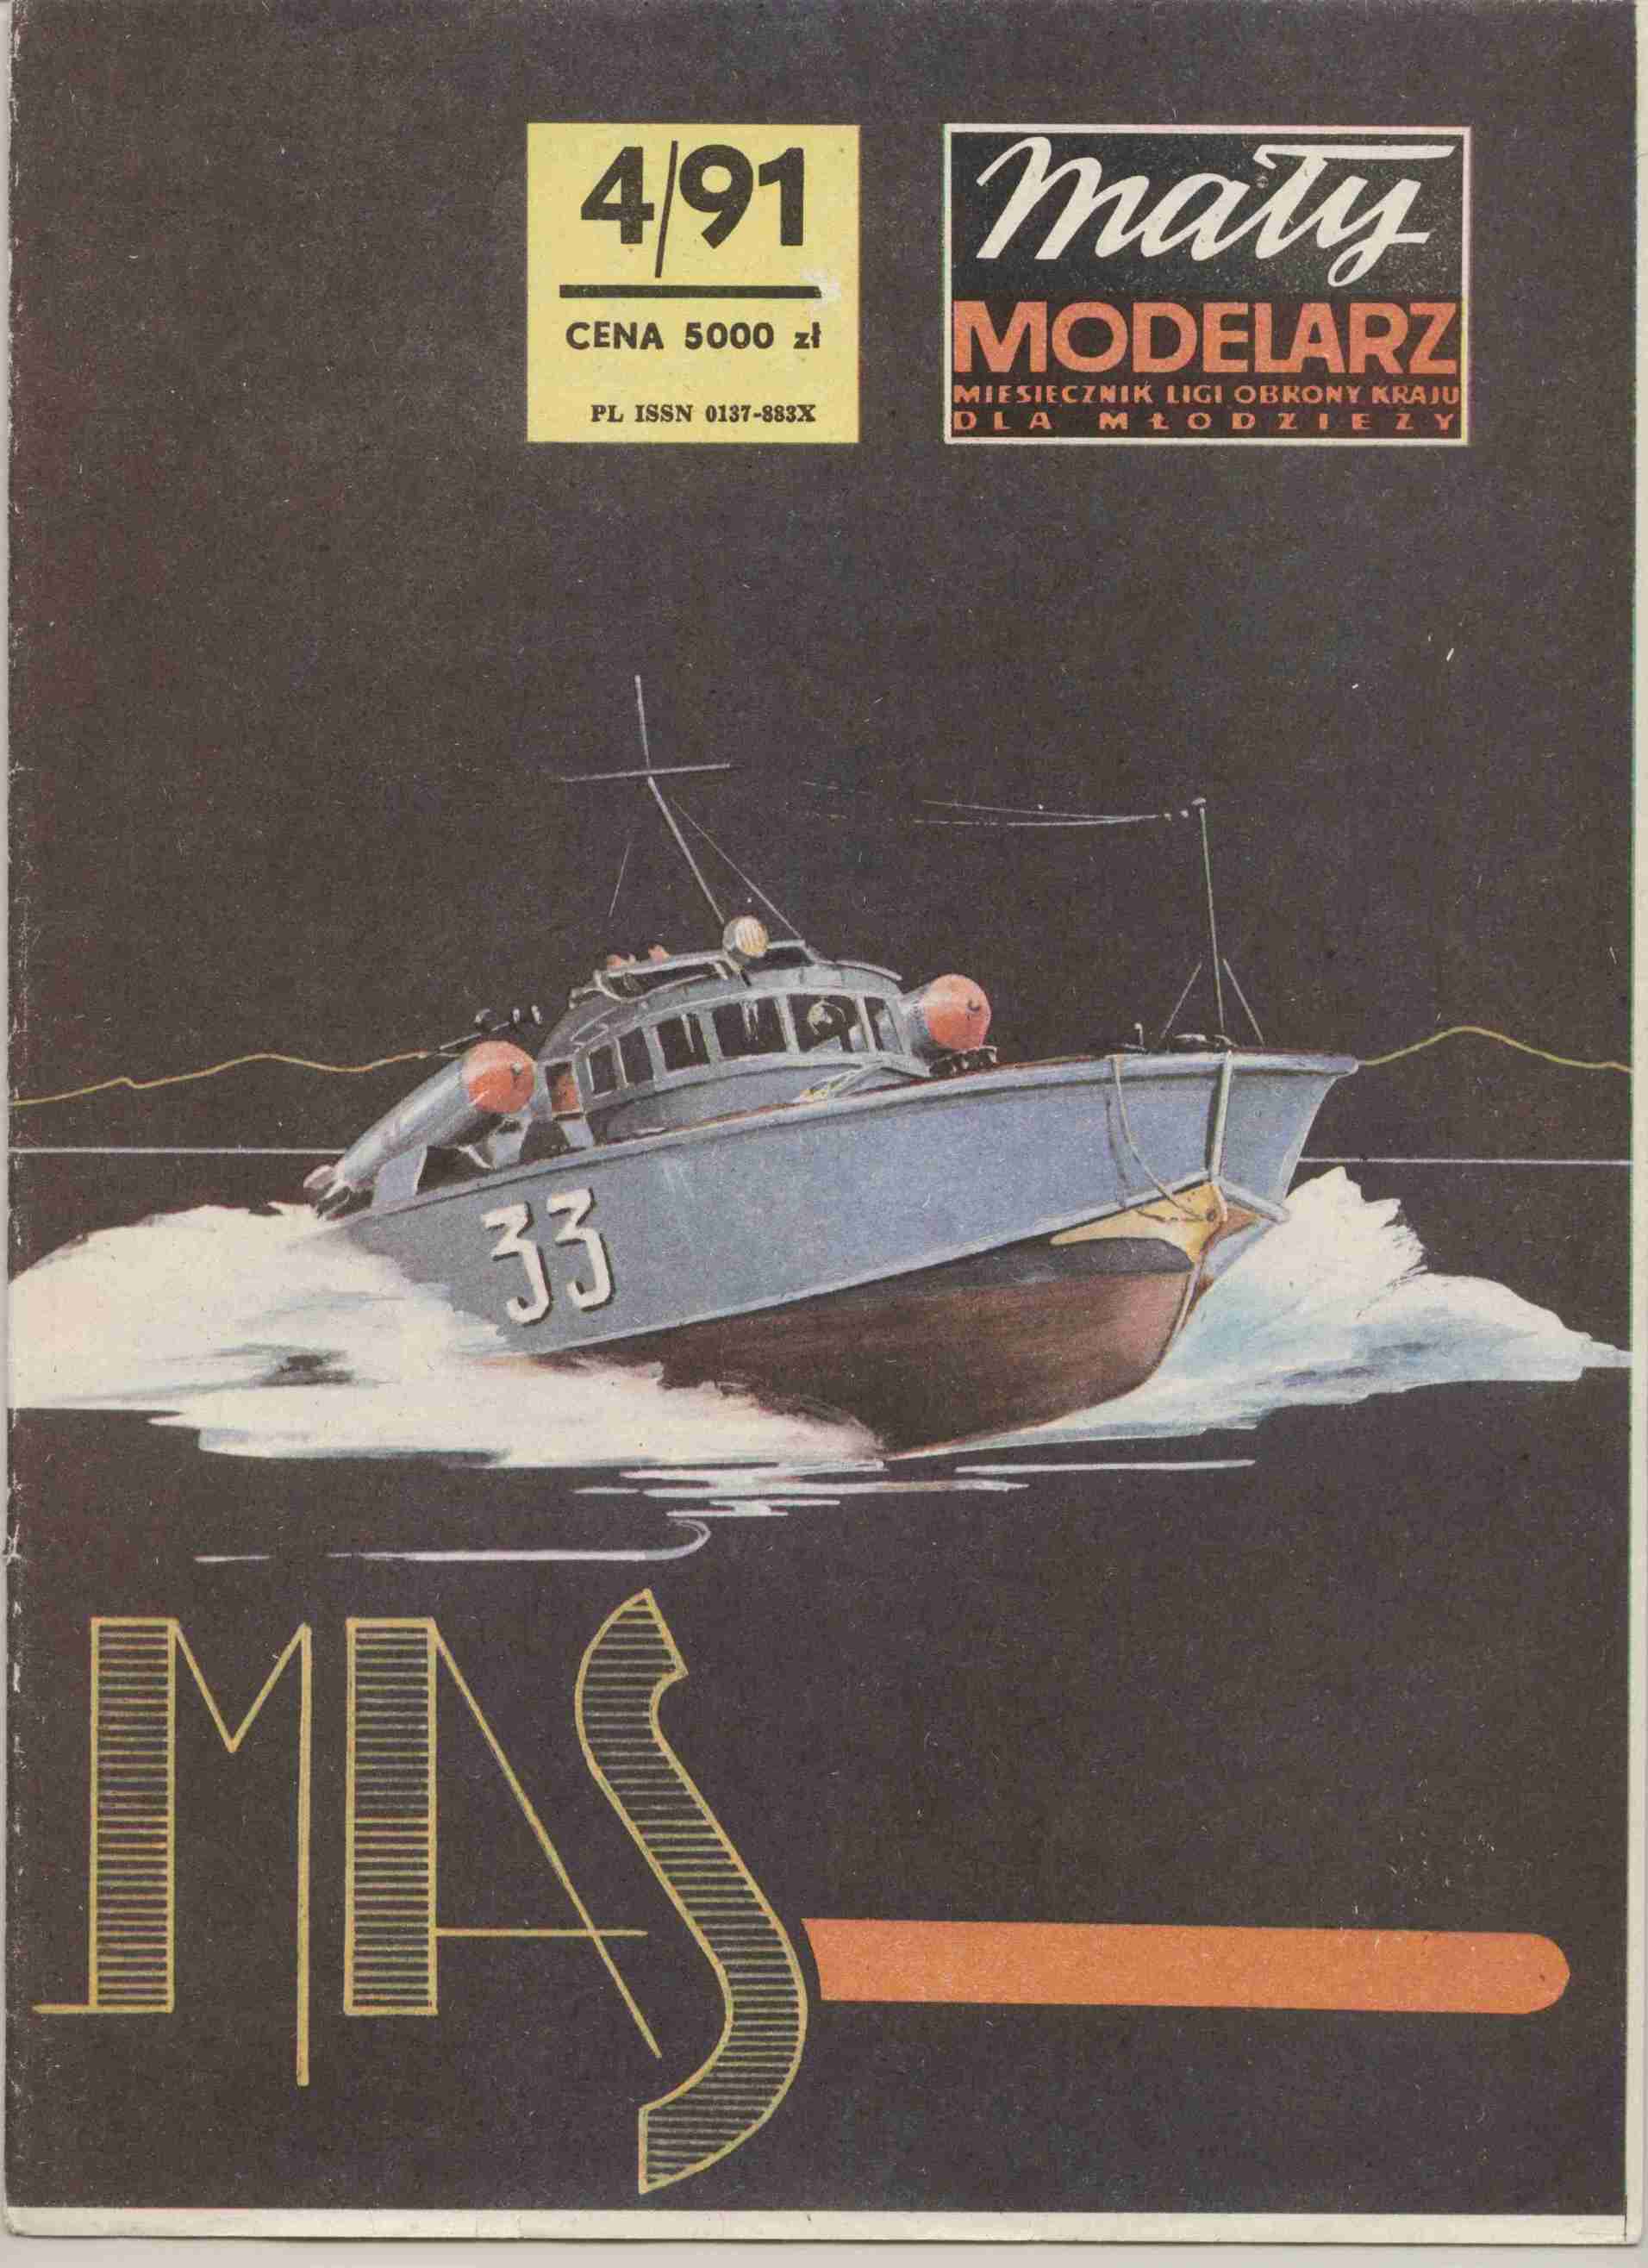 "Maly Modelarz" 4, 1991